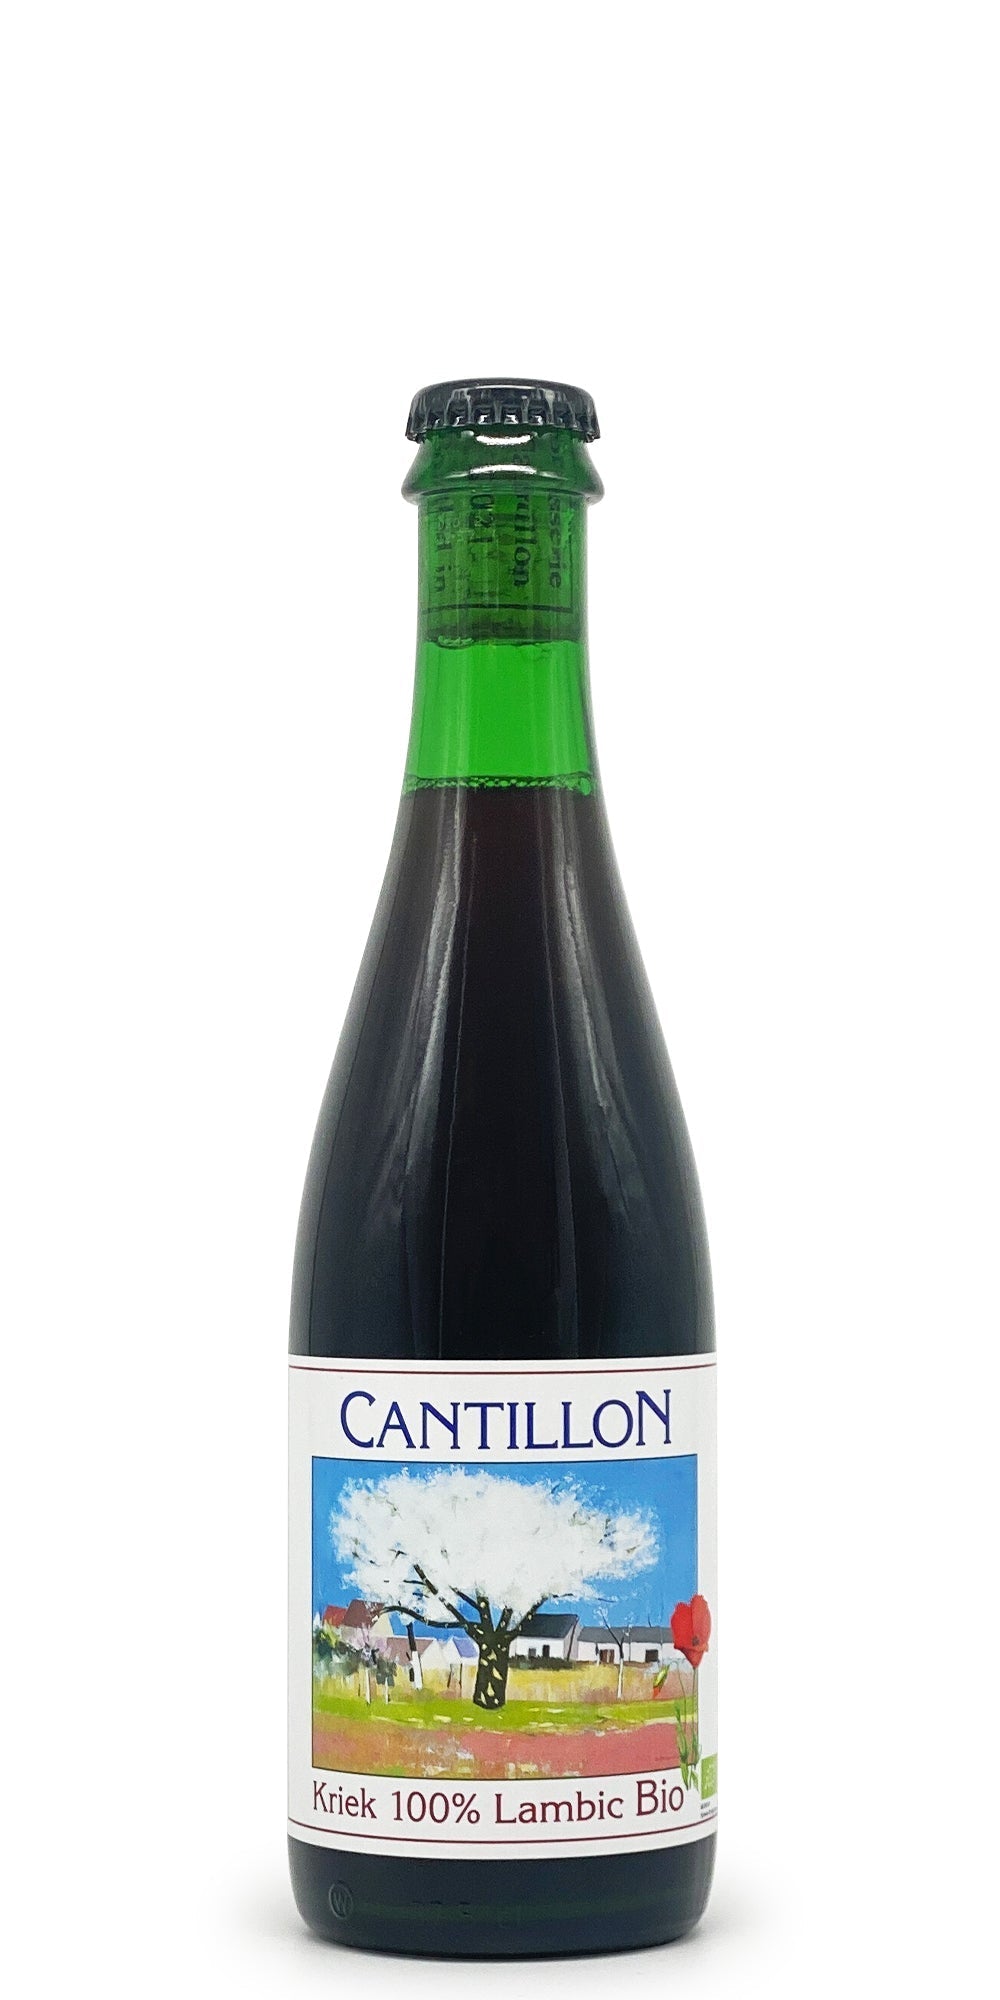 Cantillon - Kriek (2021)